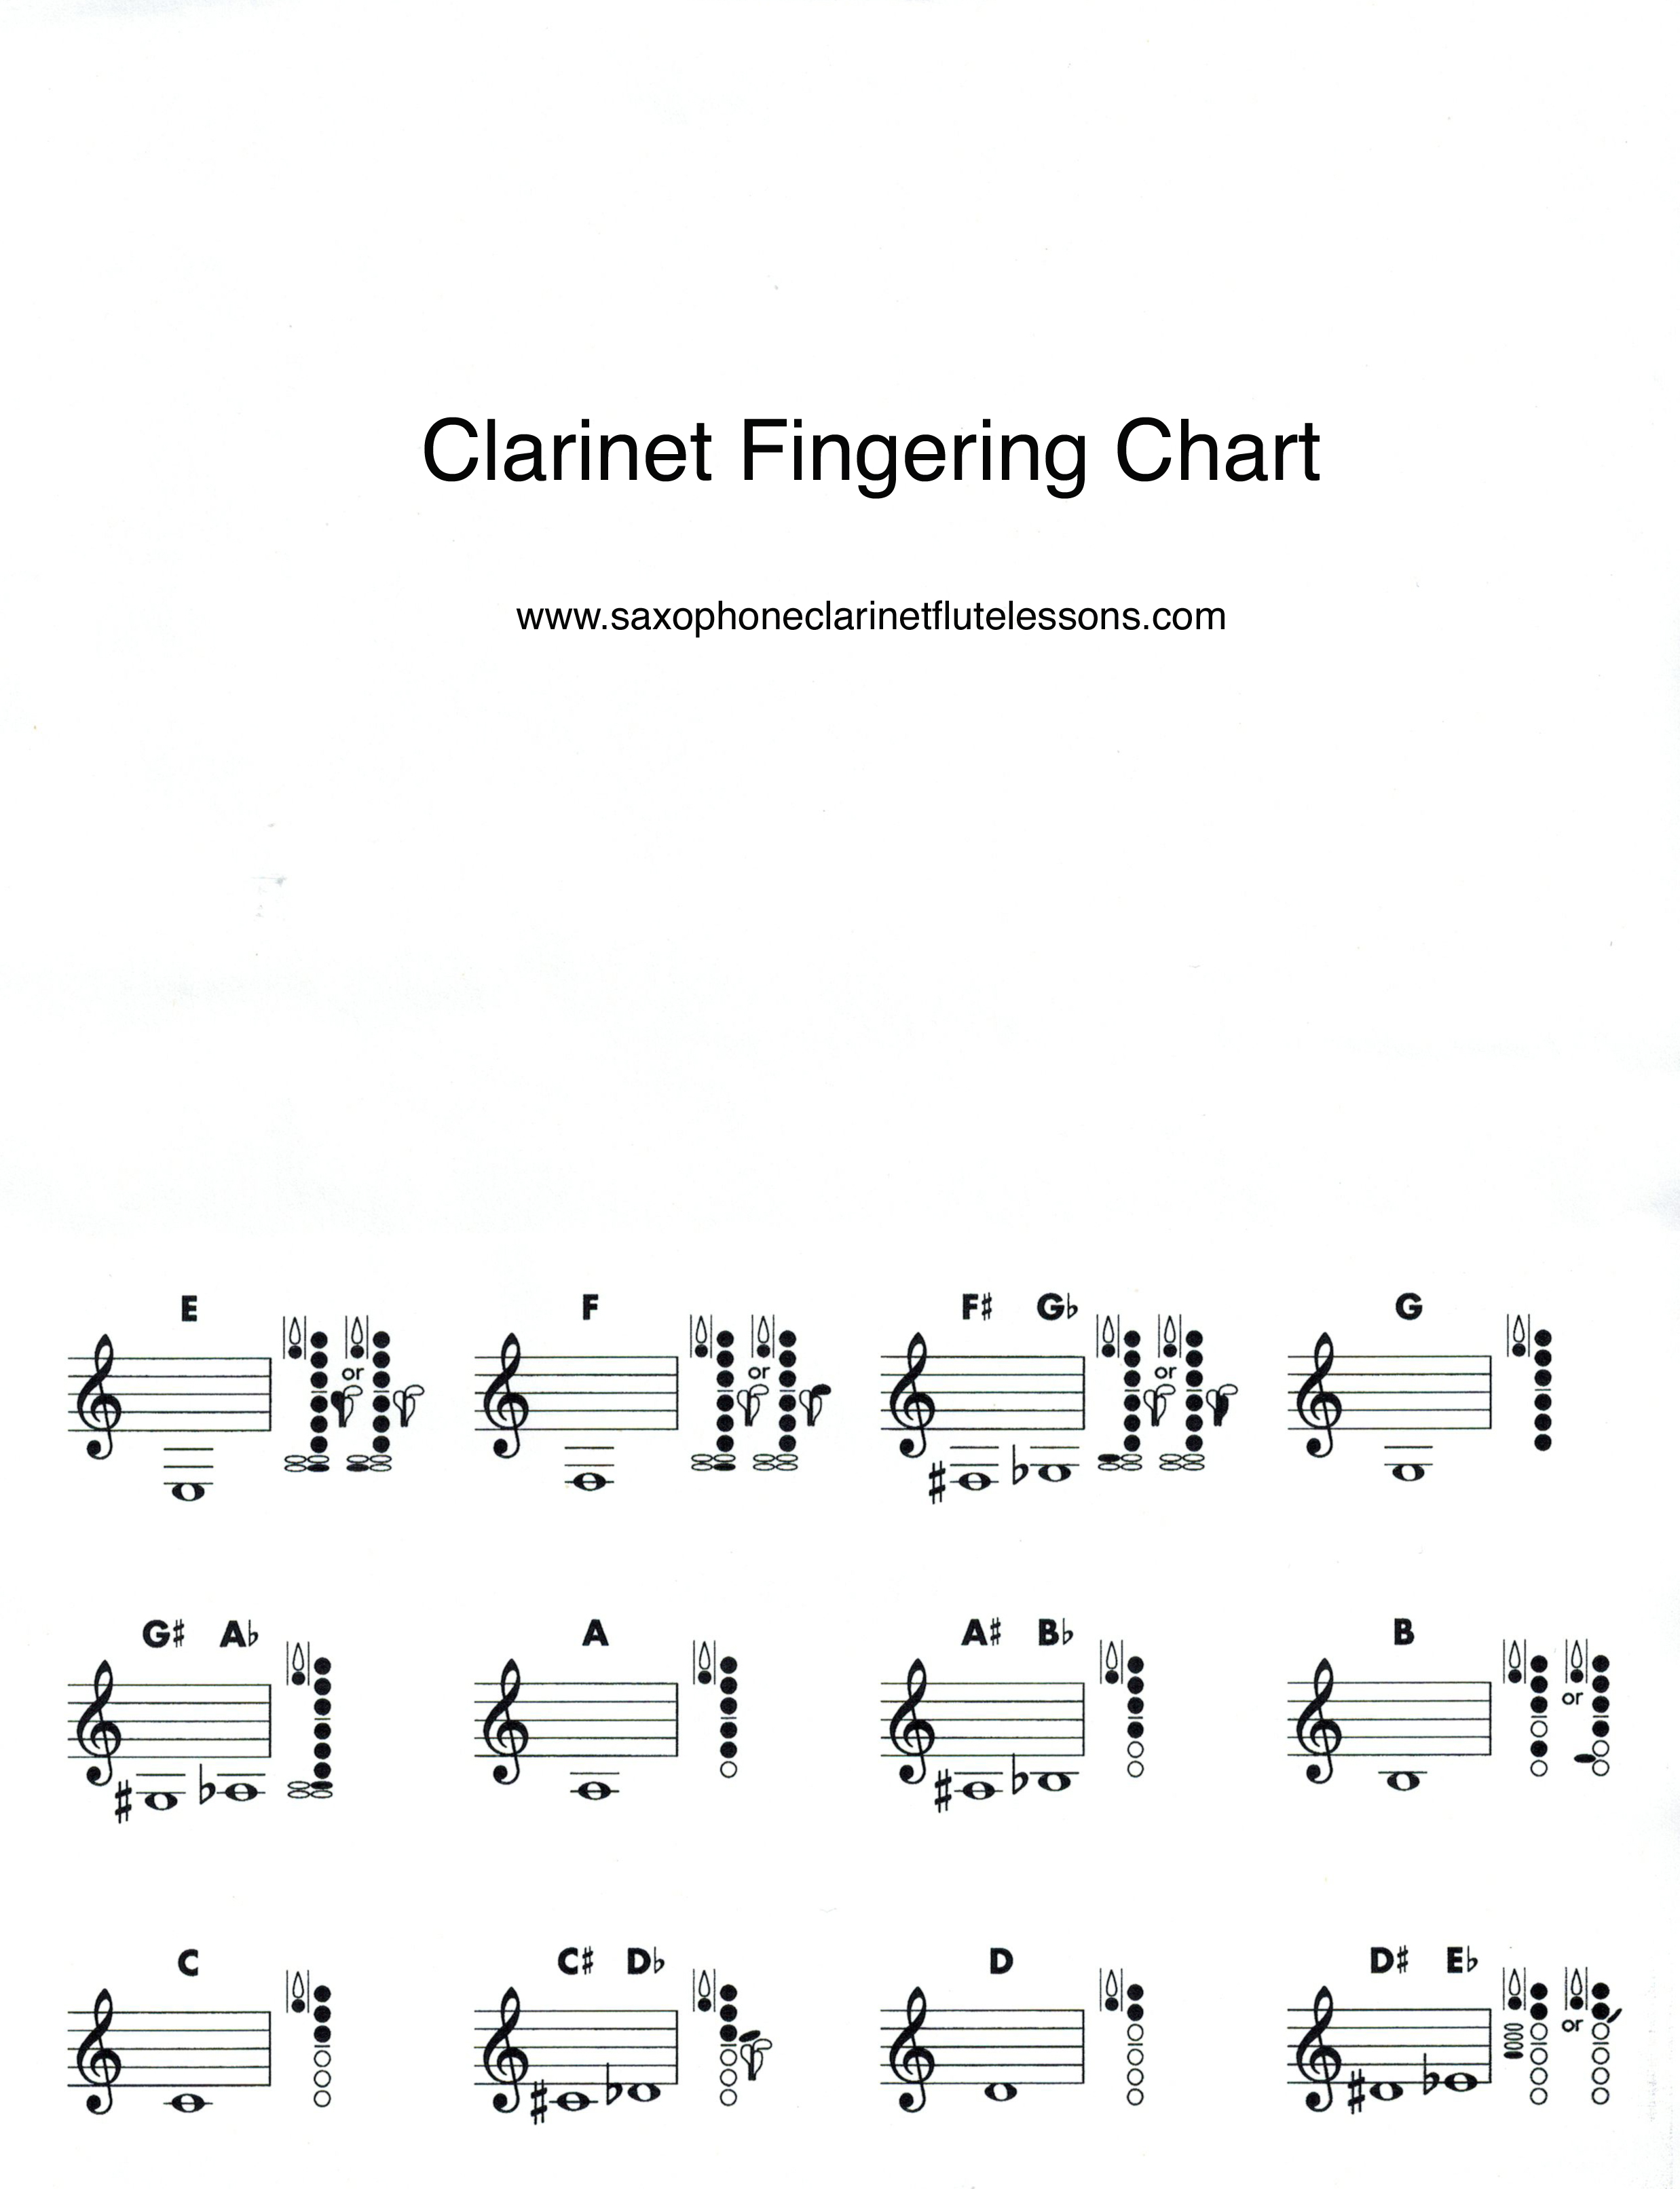 basic-clarinet-fingering-chart-ken-moran-online-clarinet-teacher-saxophone-clarinet-and